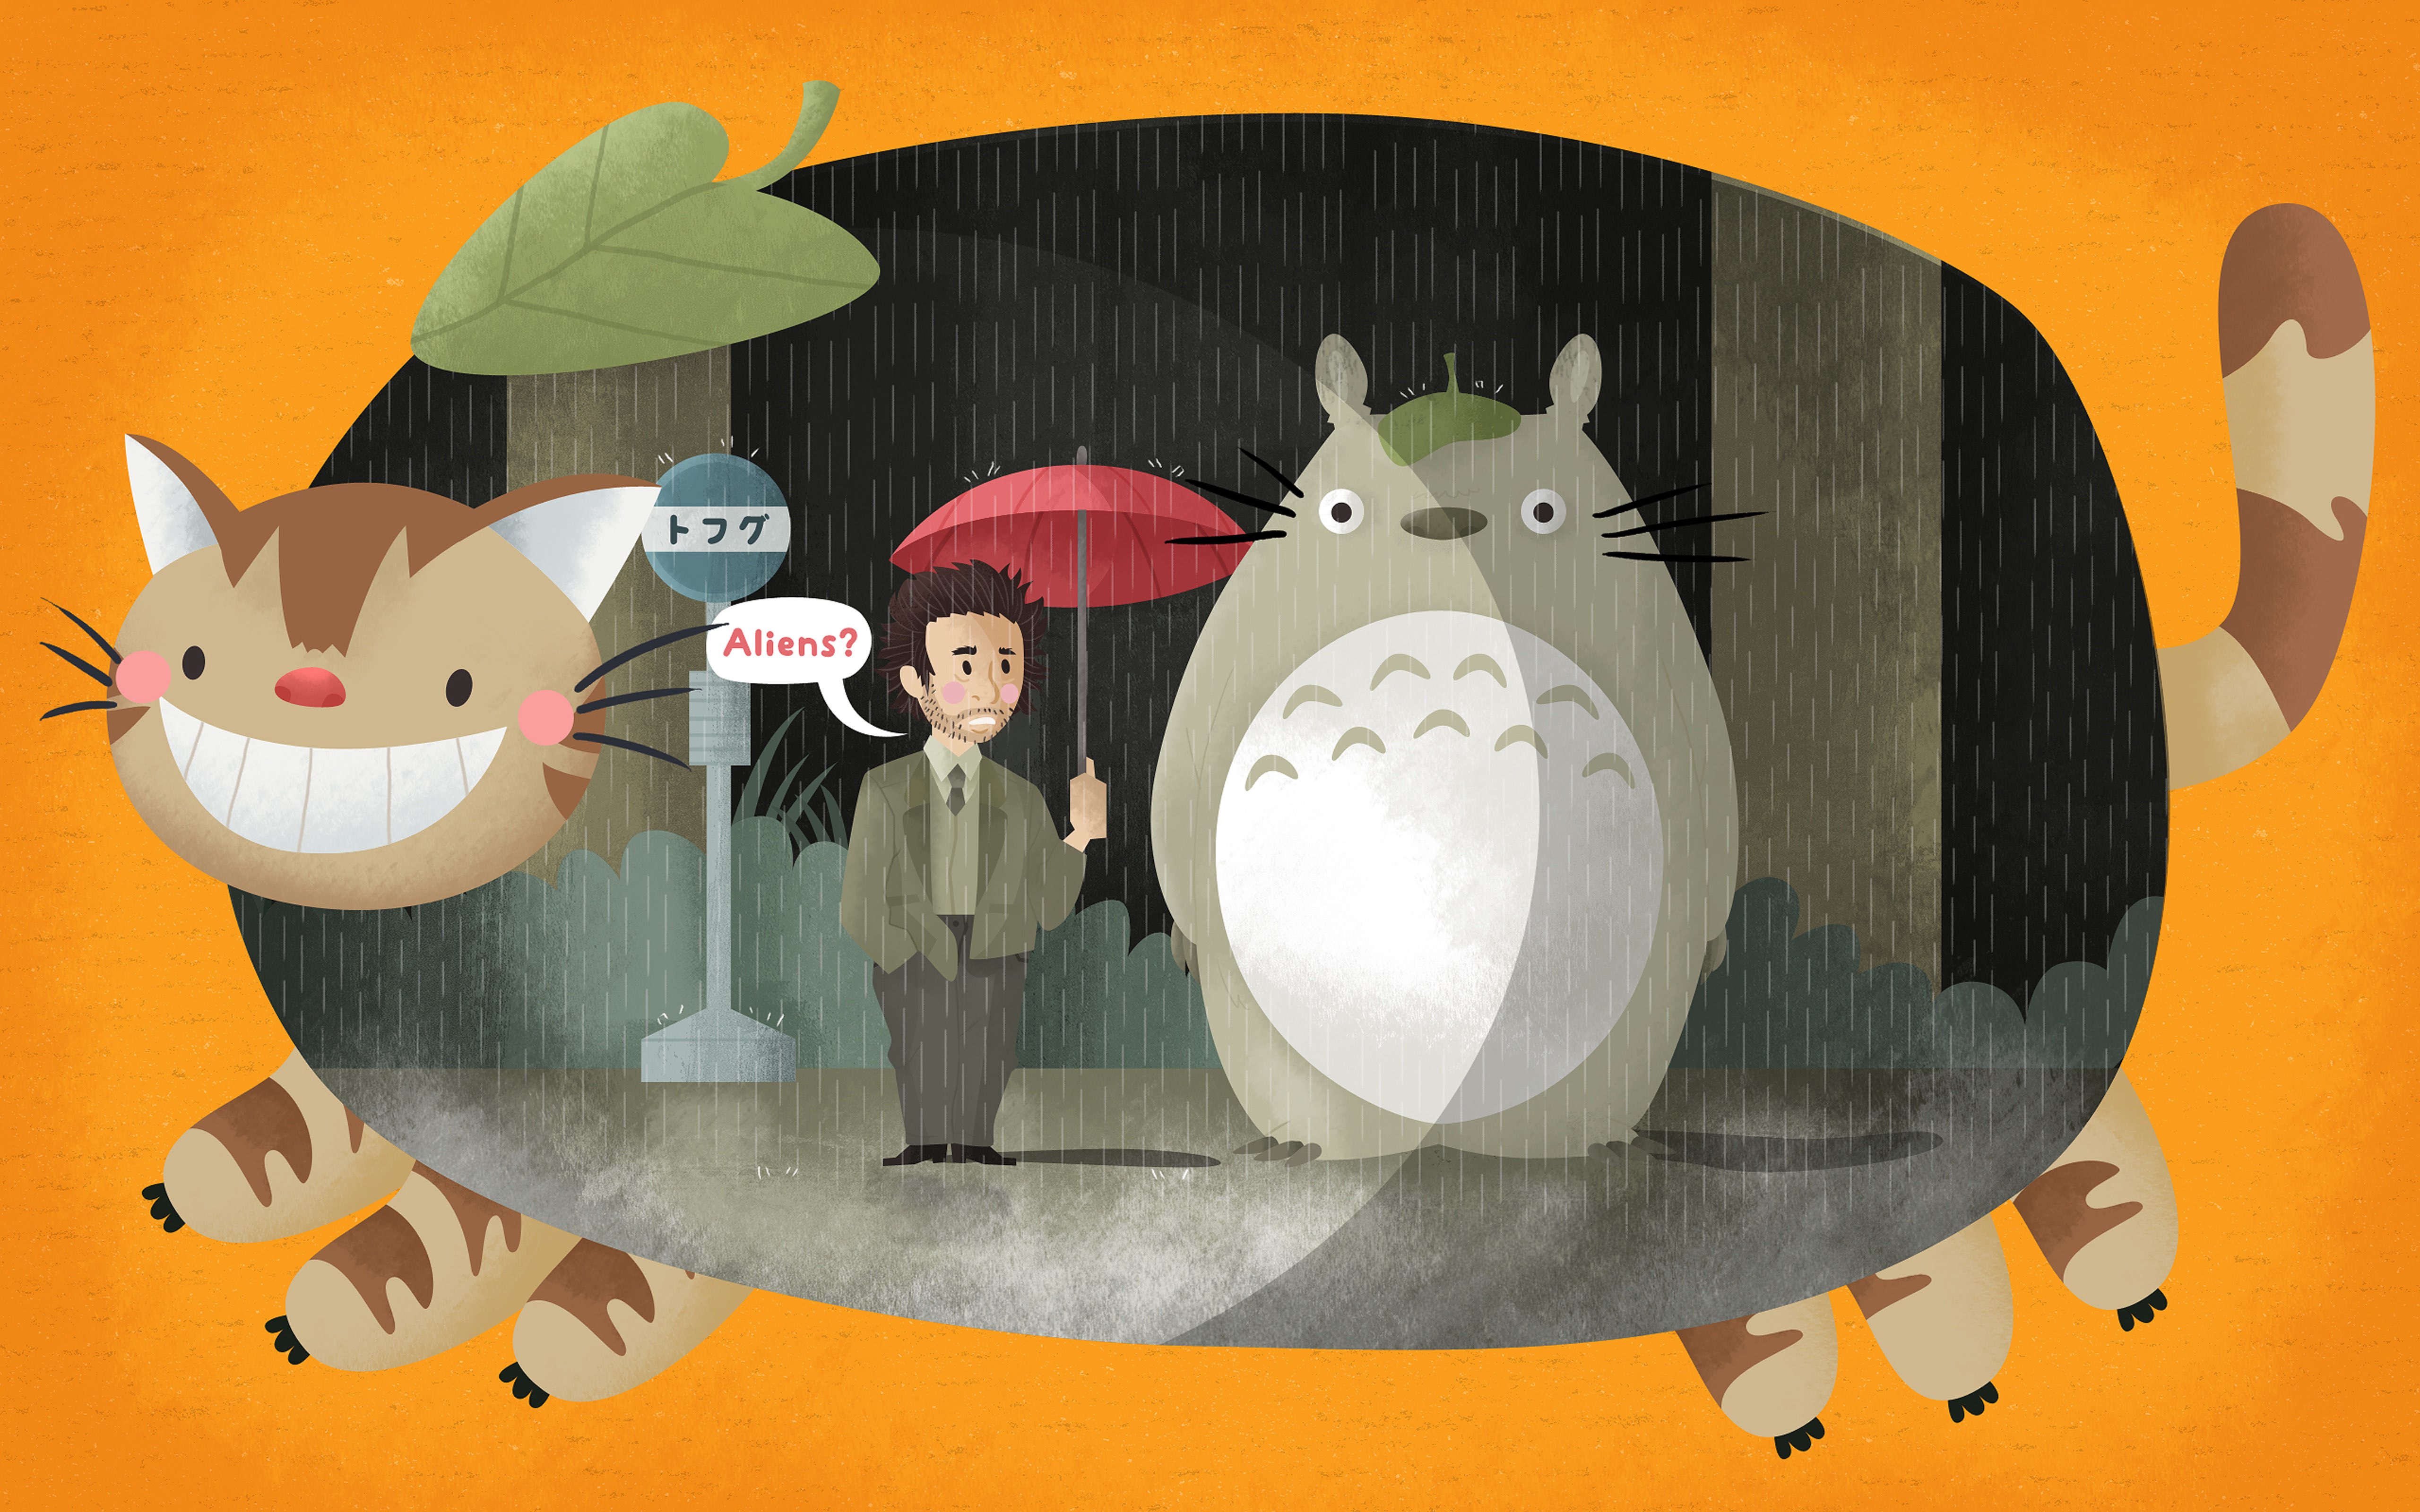 The Totoro Conspiracy: Miyazaki's Film Points to Murder